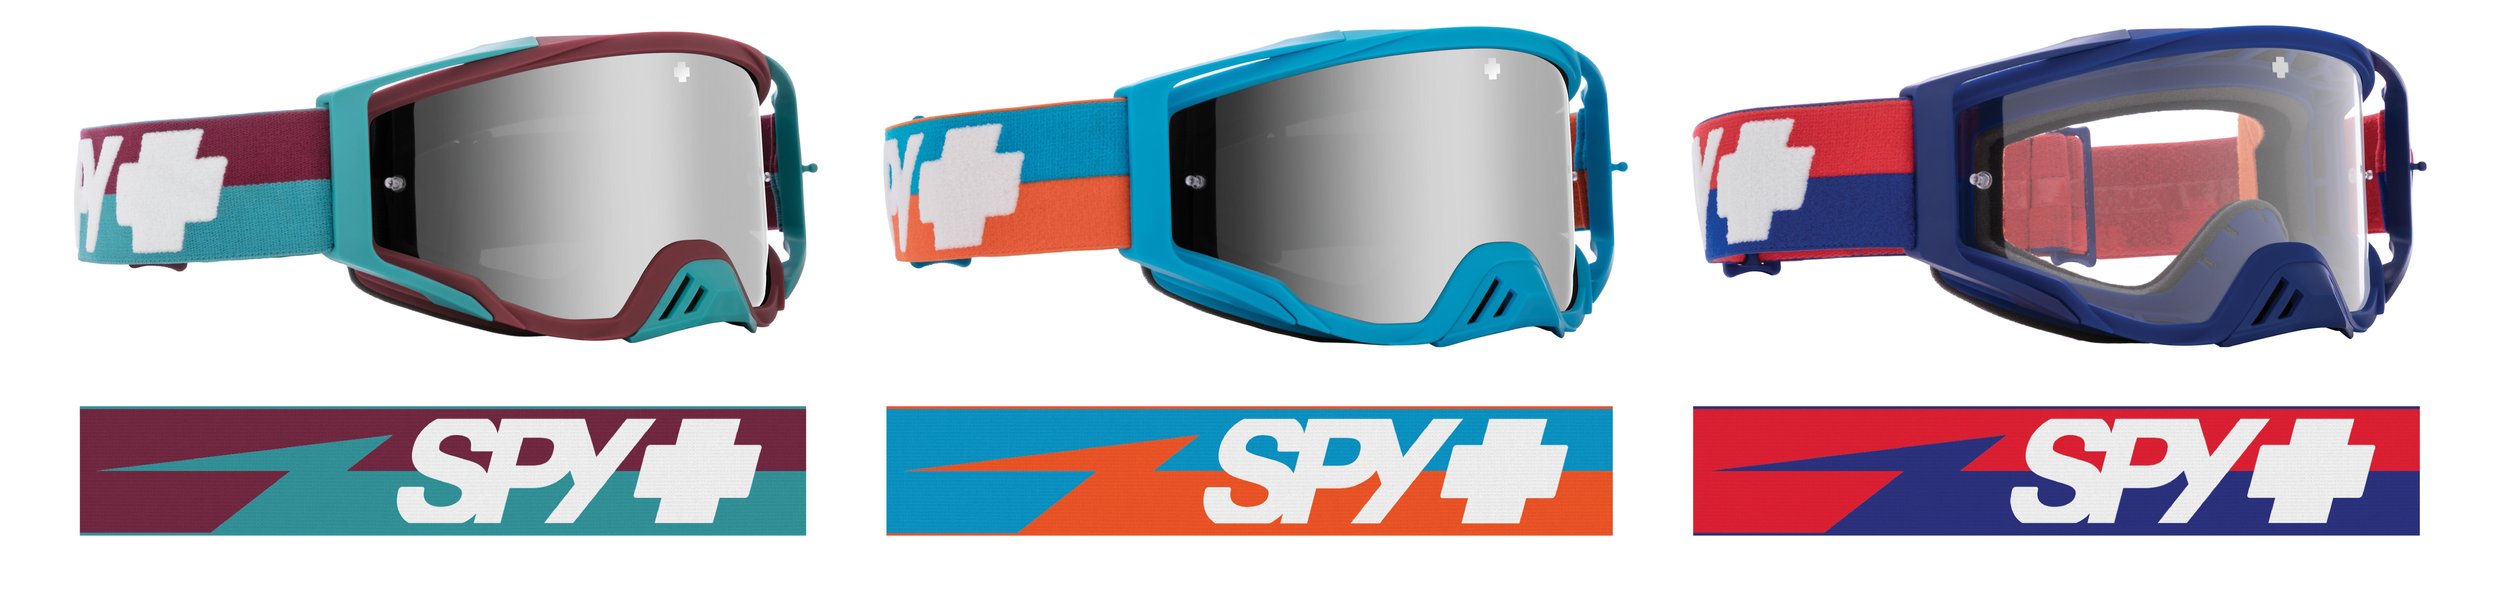 22-Website-Spy-Mx-Goggles-Bolt-Series.jpg